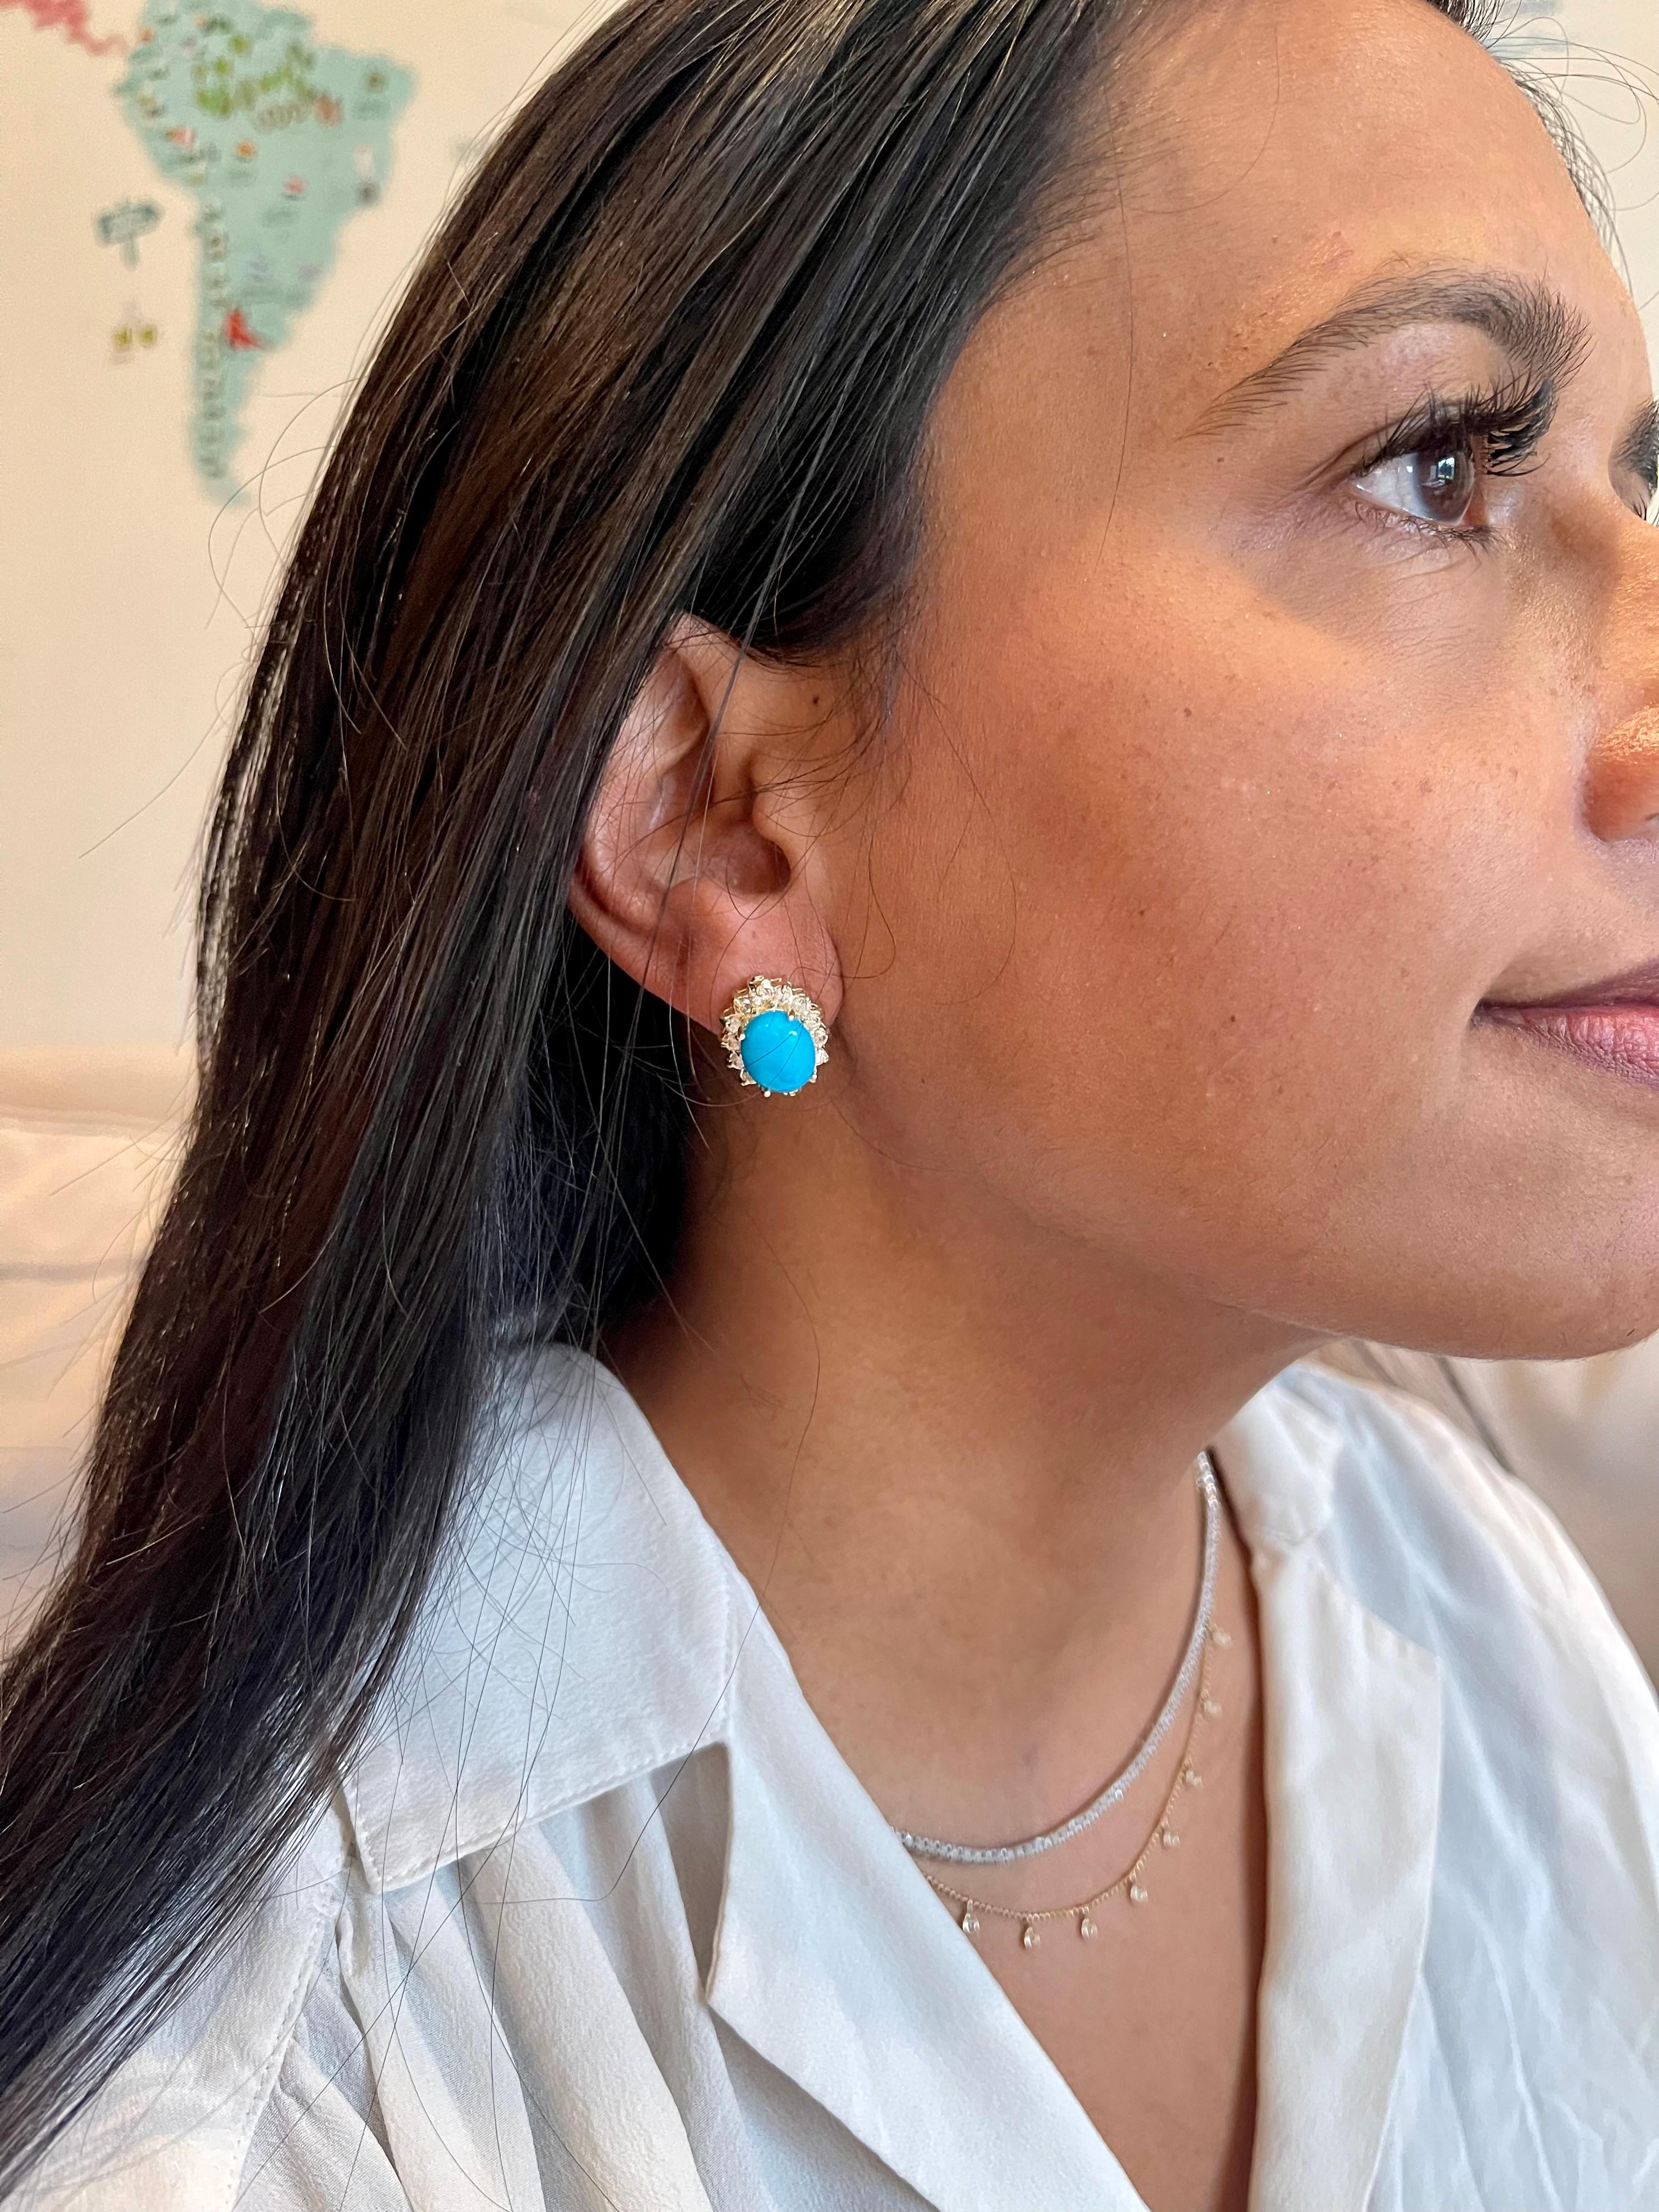 turquoise and diamond stud earrings